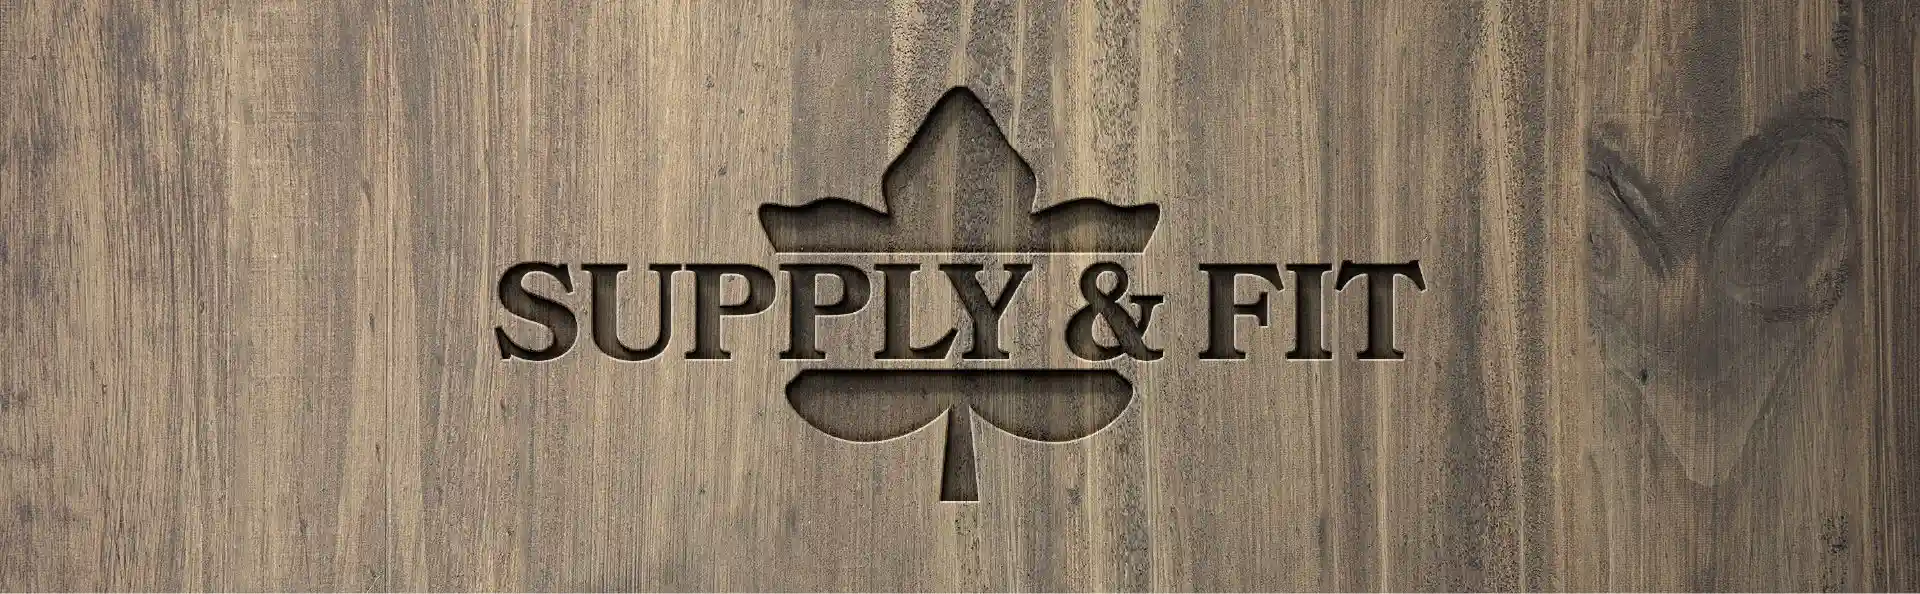 Supply & Fit logo